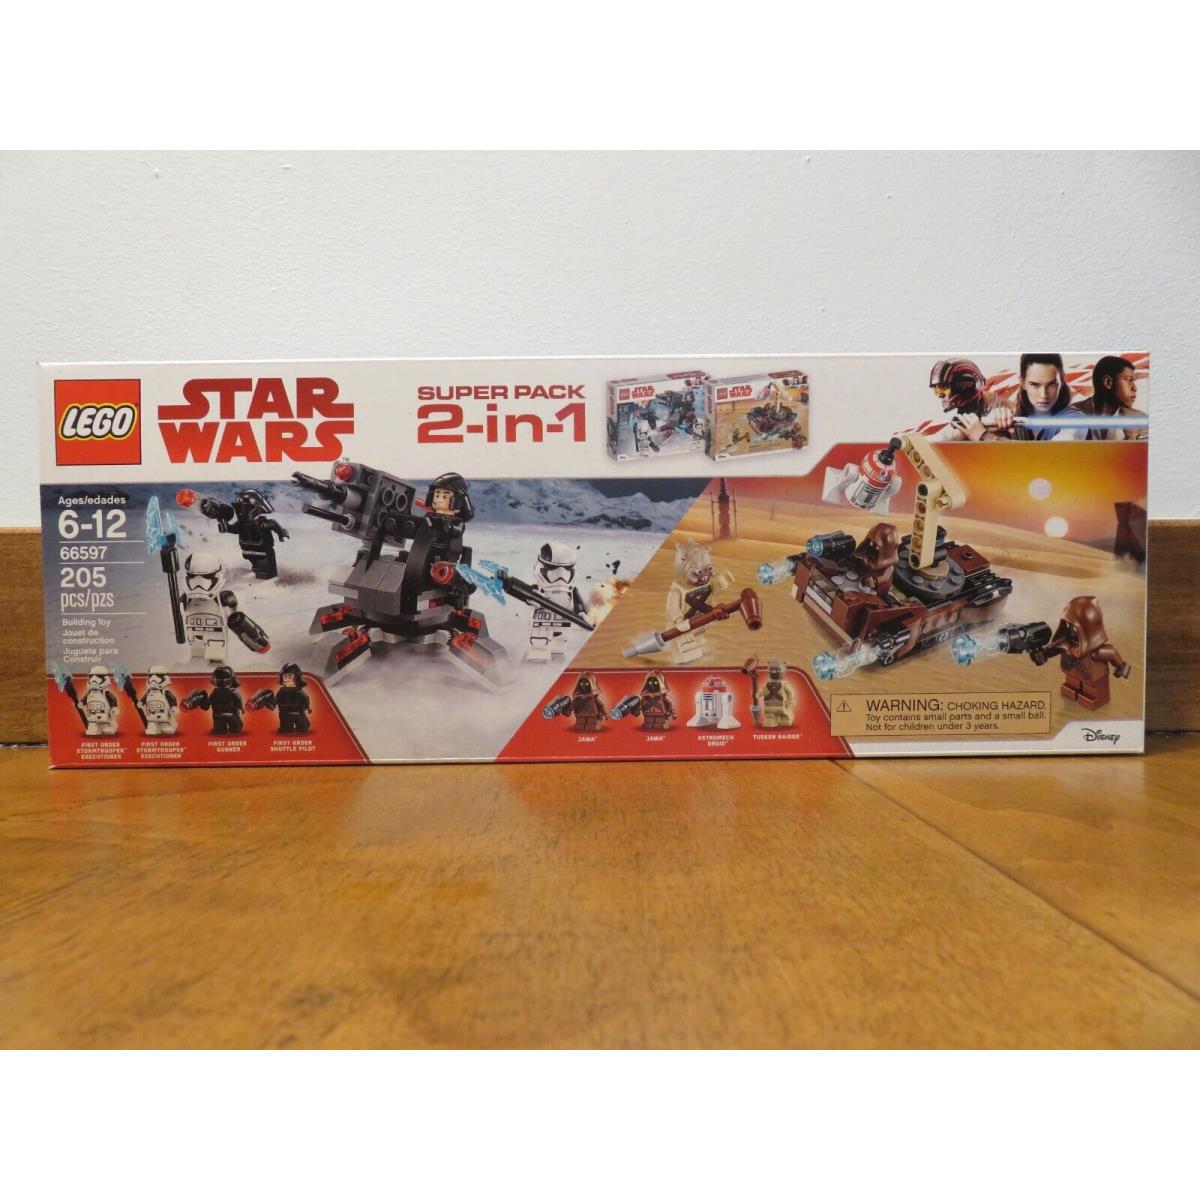 Lego Star Wars 66597 Super Pack 2-in-1 Retired